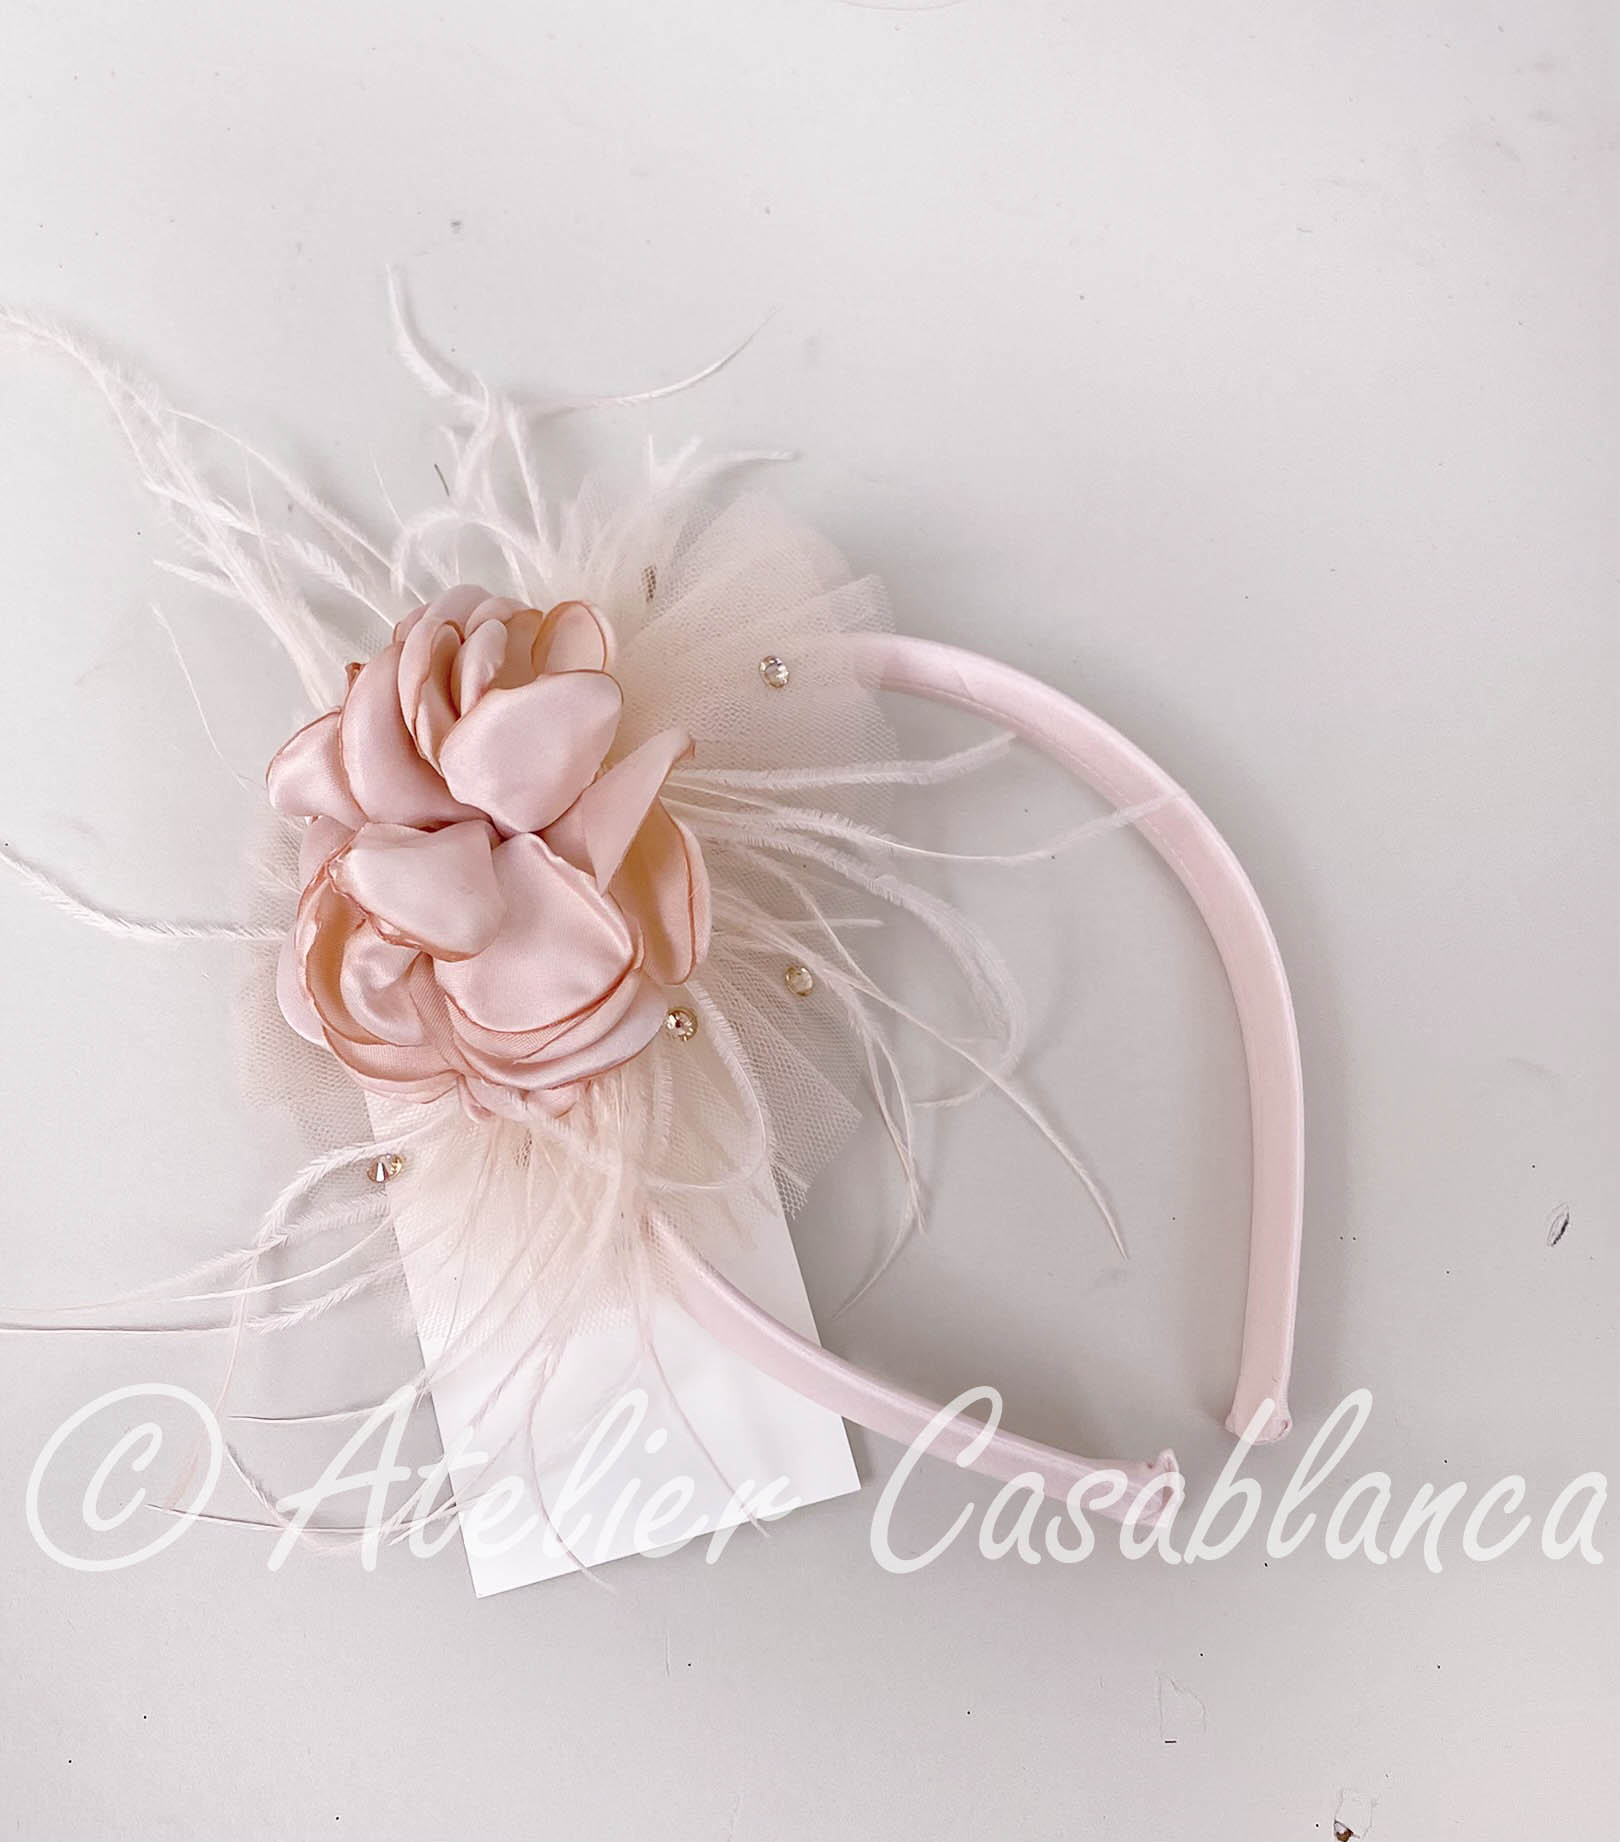 K Zl 23 北欧のラグジュアリーキッズドレスブランド ザザクチュール が製作した 立体的なバラと羽が美しいシャンパンピンク色のカチューシャ ヨーロッパ製のドレス レッスンウェアの販売 製作 アトリエカサブランカ